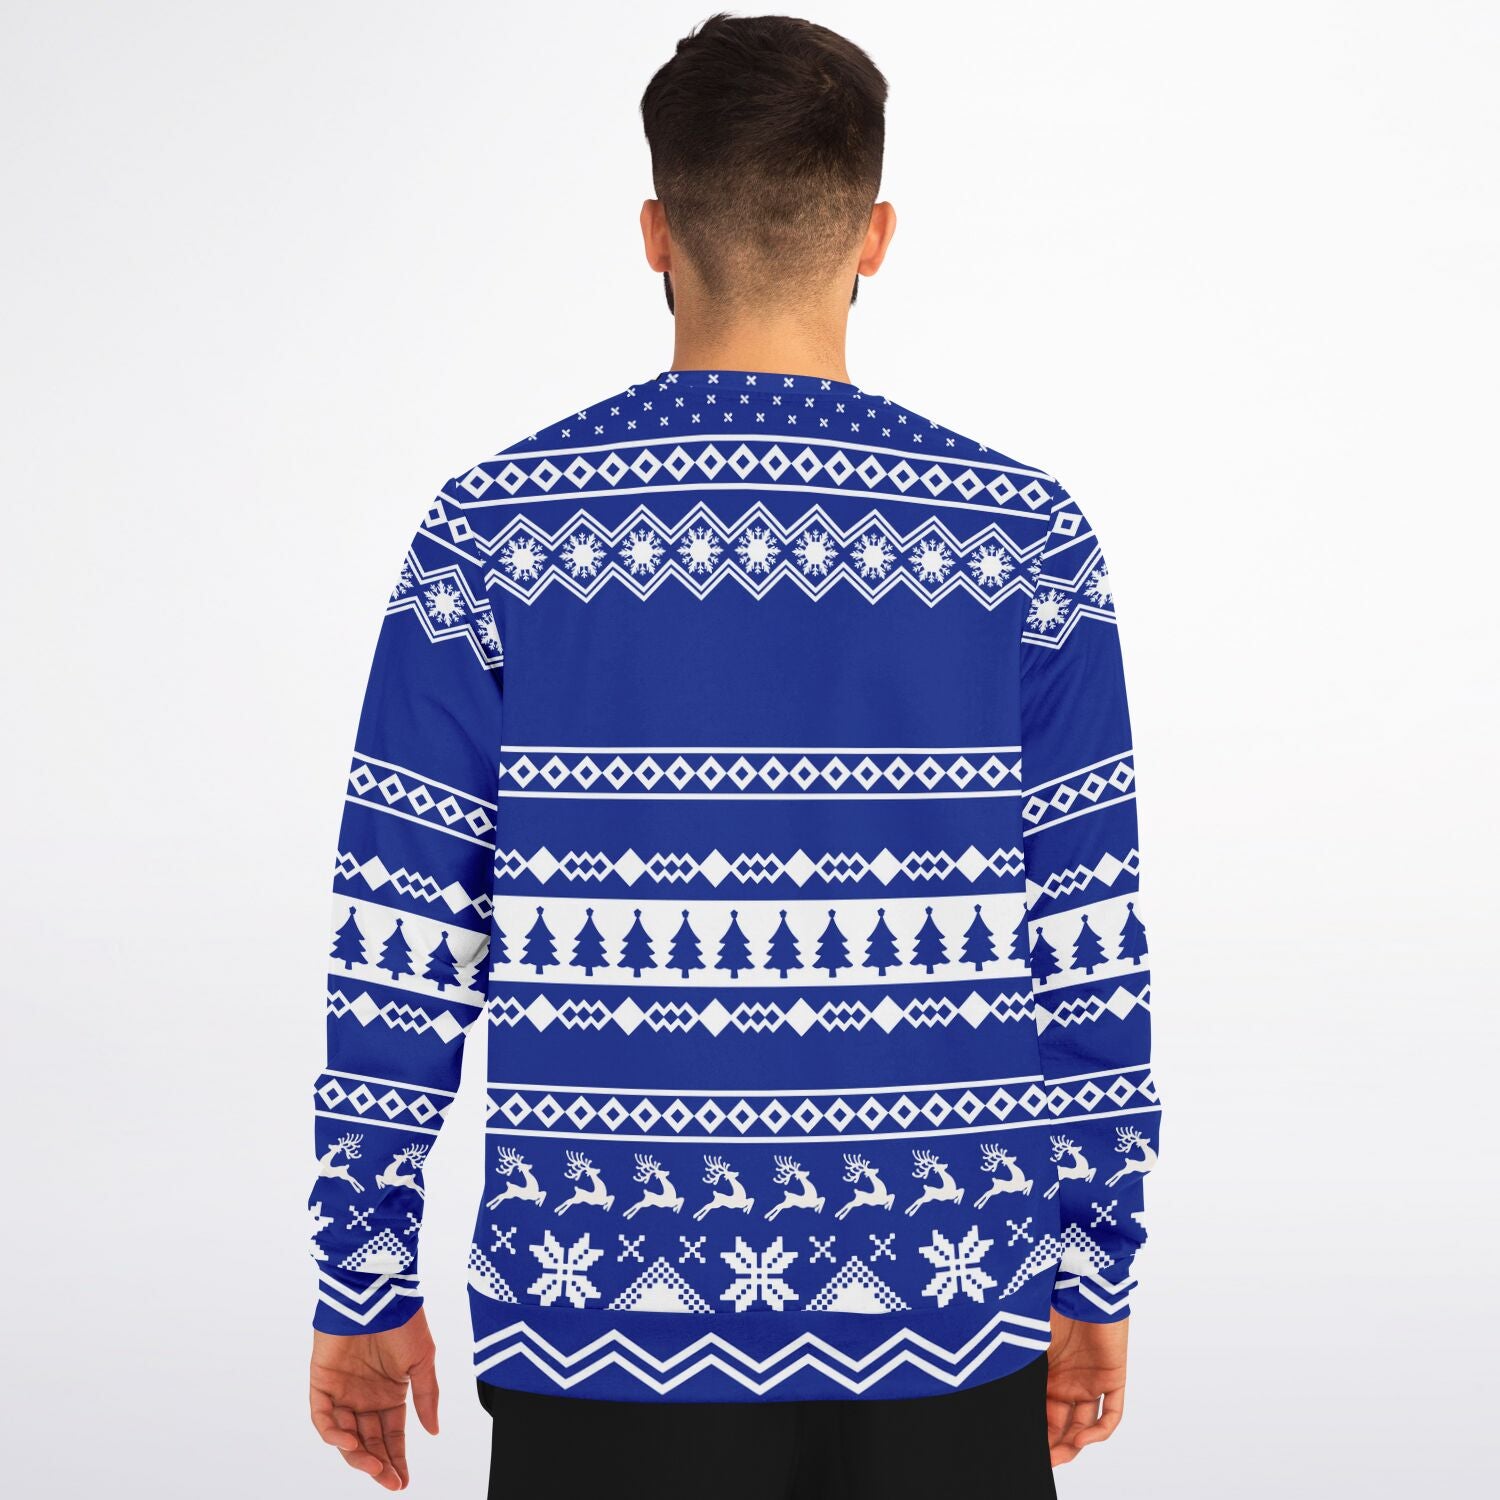 Vegan Ate My Nose Sweatshirt | Unisex Ugly Christmas Sweater, Xmas Sweater, Holiday Sweater, Festive Sweater, Funny Sweater, Funny Party Shirt